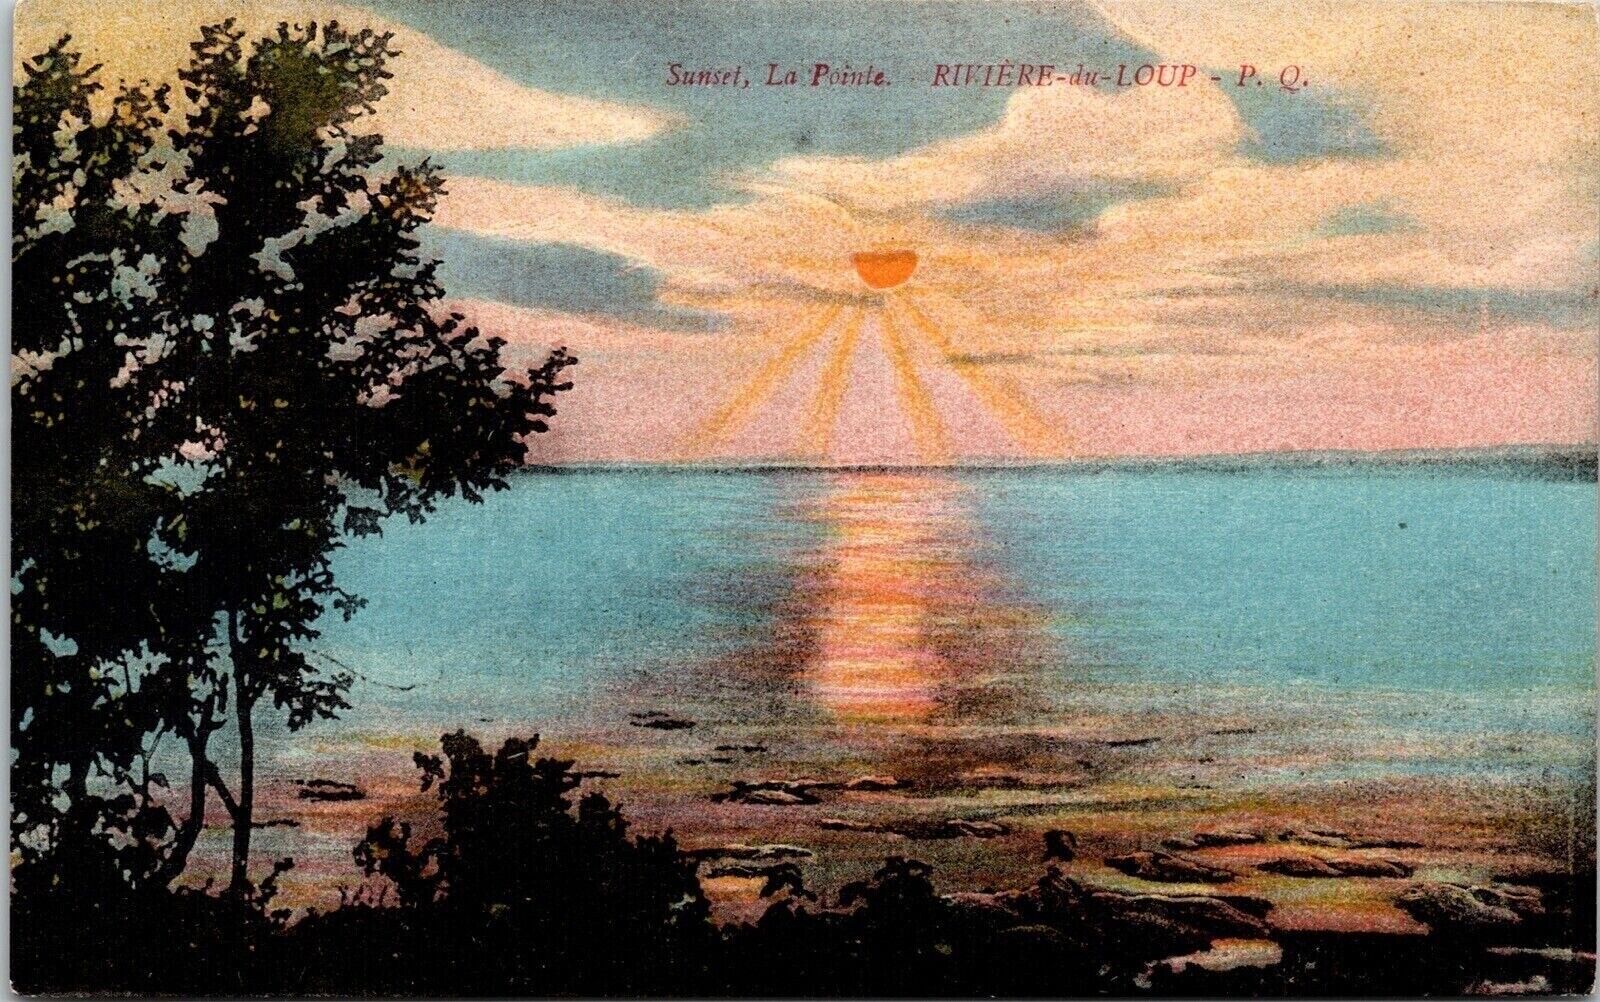 La Pointe Riviere Du Loup Quebec Canada Scenic Sunset DB WOB Postcard